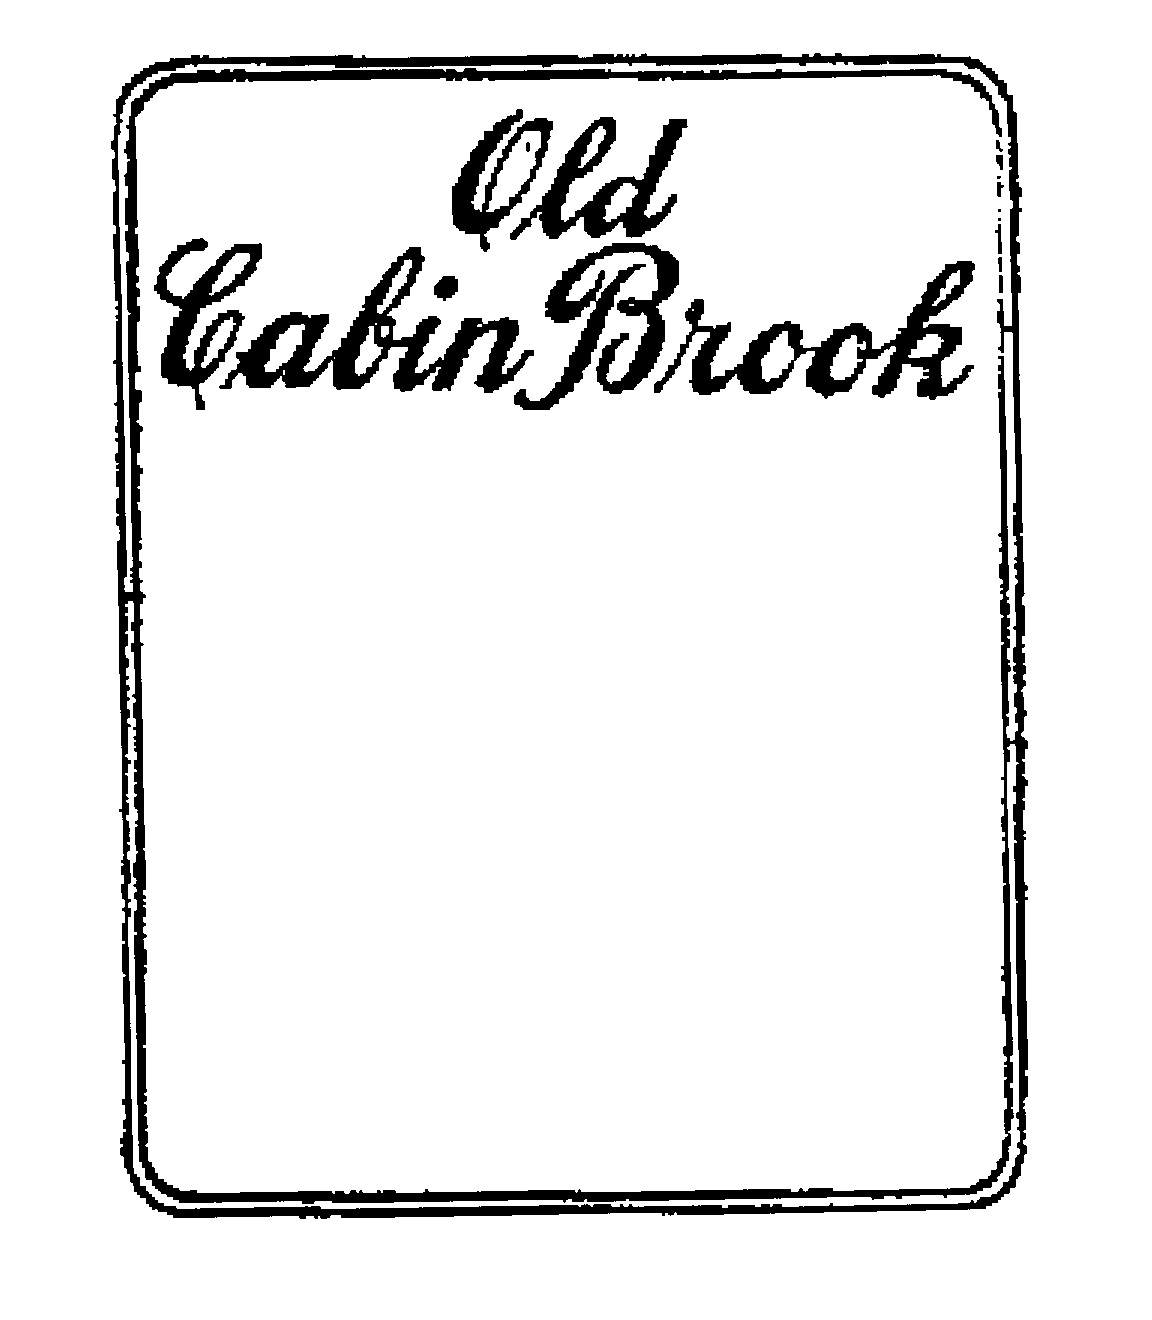  OLD CABIN BROOK